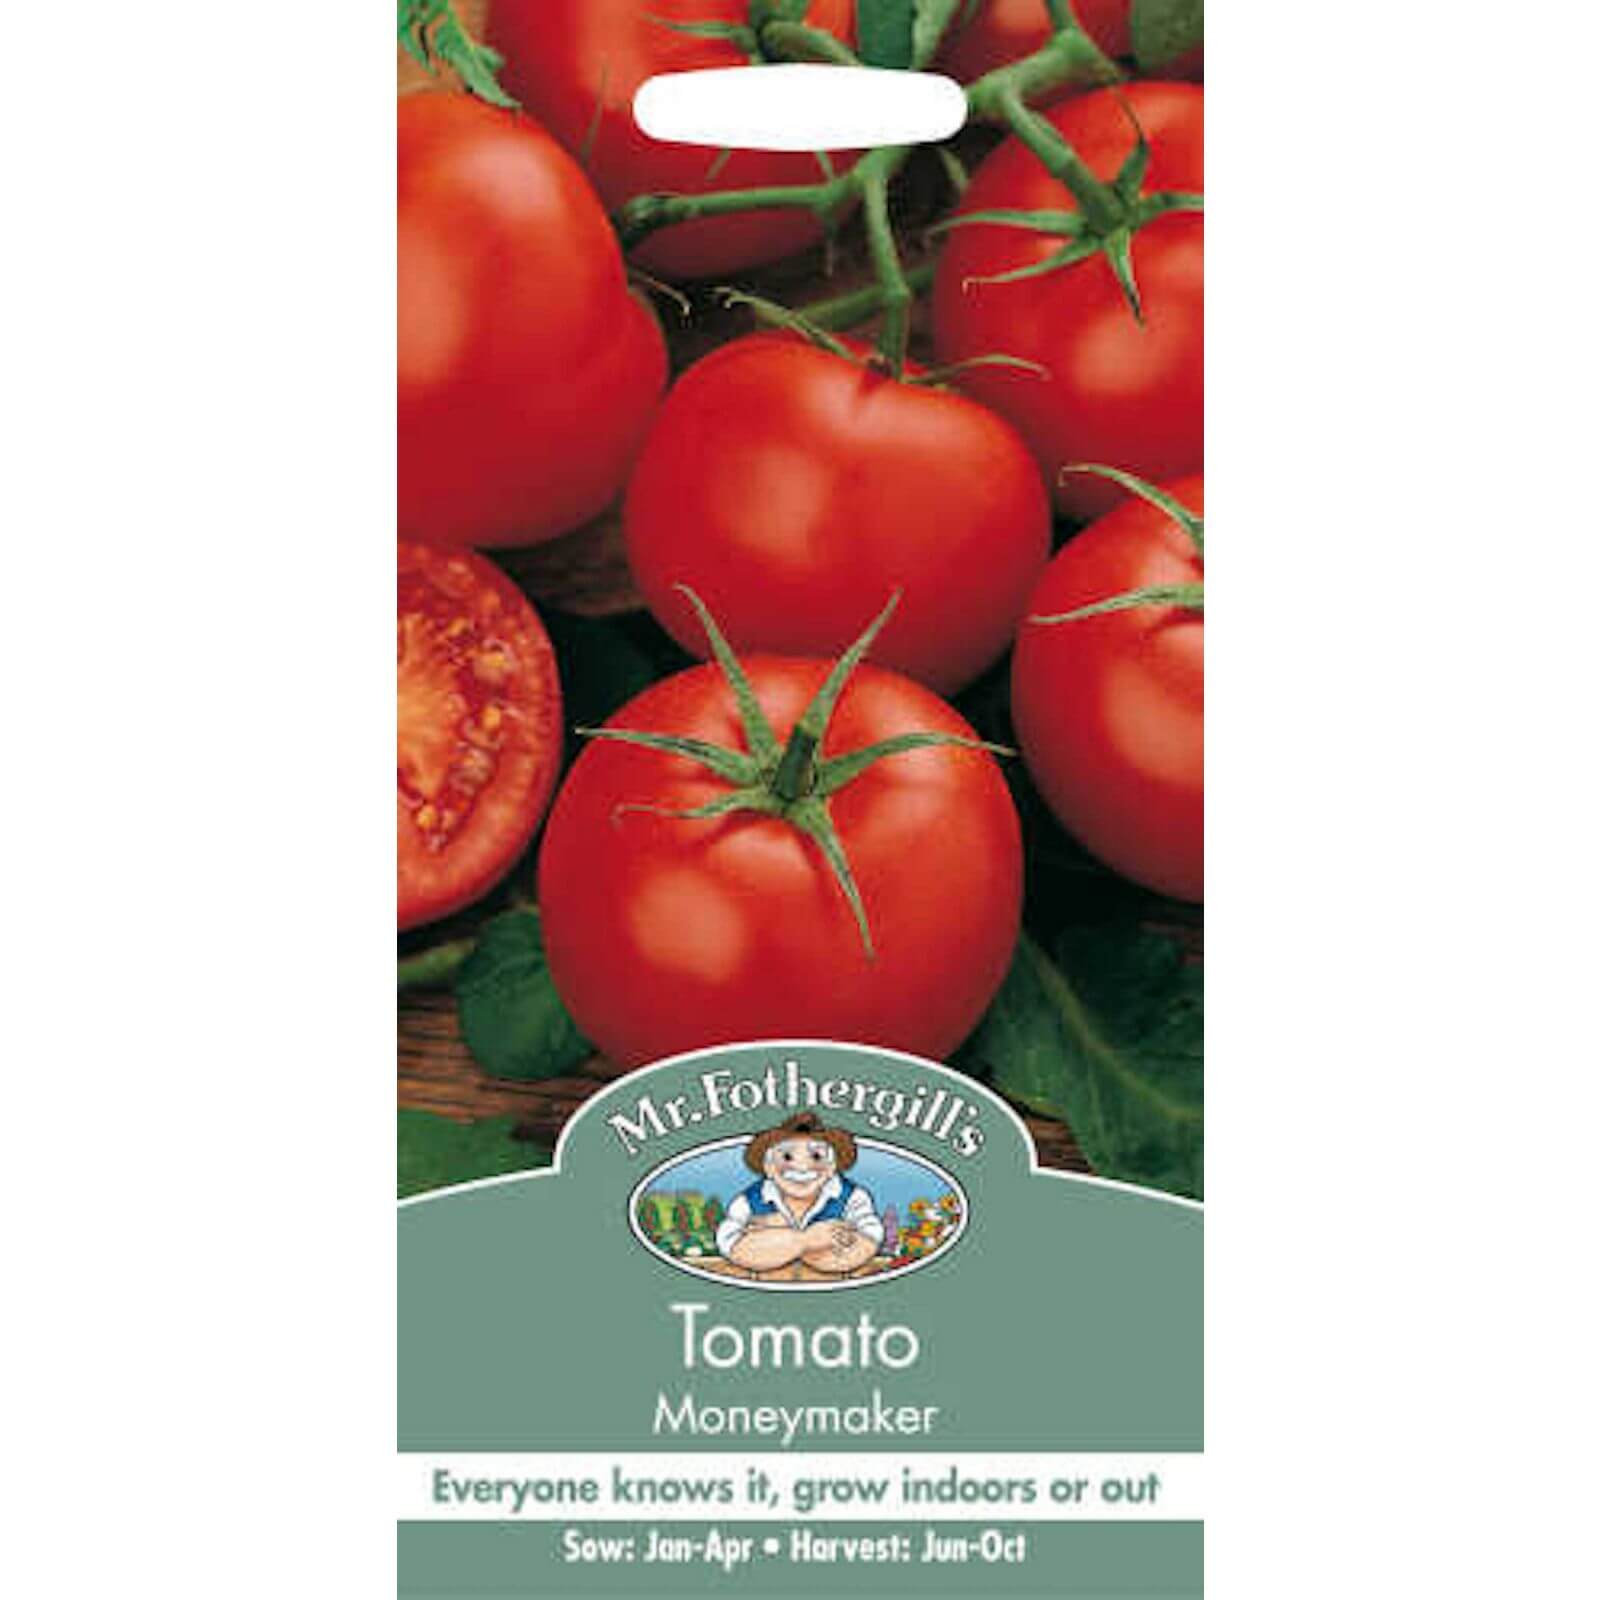 Mr. Fothergill's Tomato Moneymaker (Lycopersicon Lycopersicum) Seeds